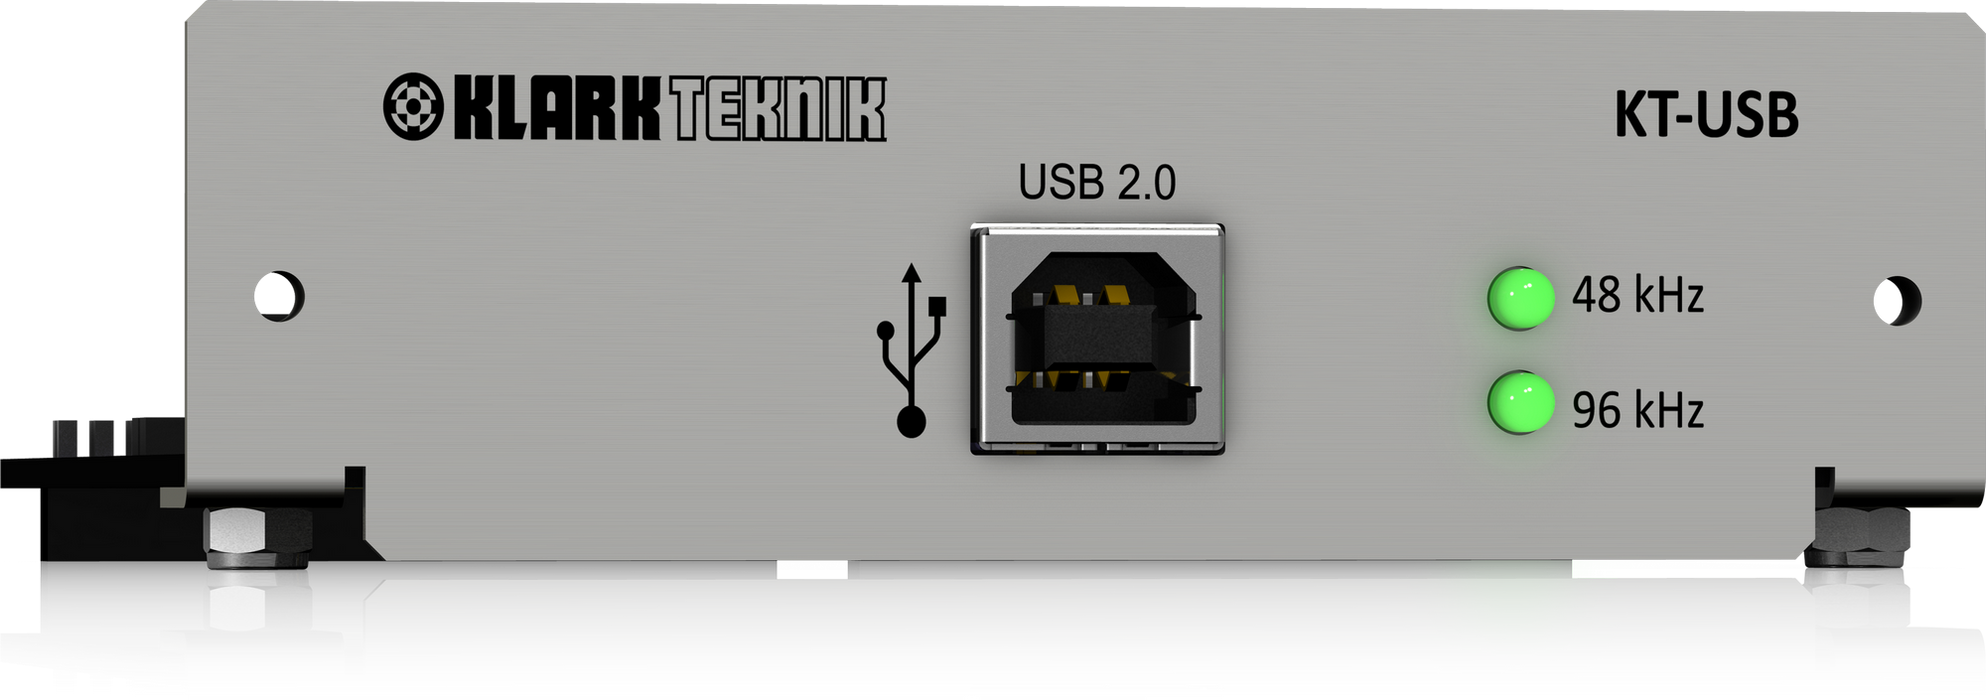 Klark Teknik KT-USB USB 2.0 Network Module with up to 48 Bidirectional Channels (KTUSB / KT USB) - Music Bliss Malaysia